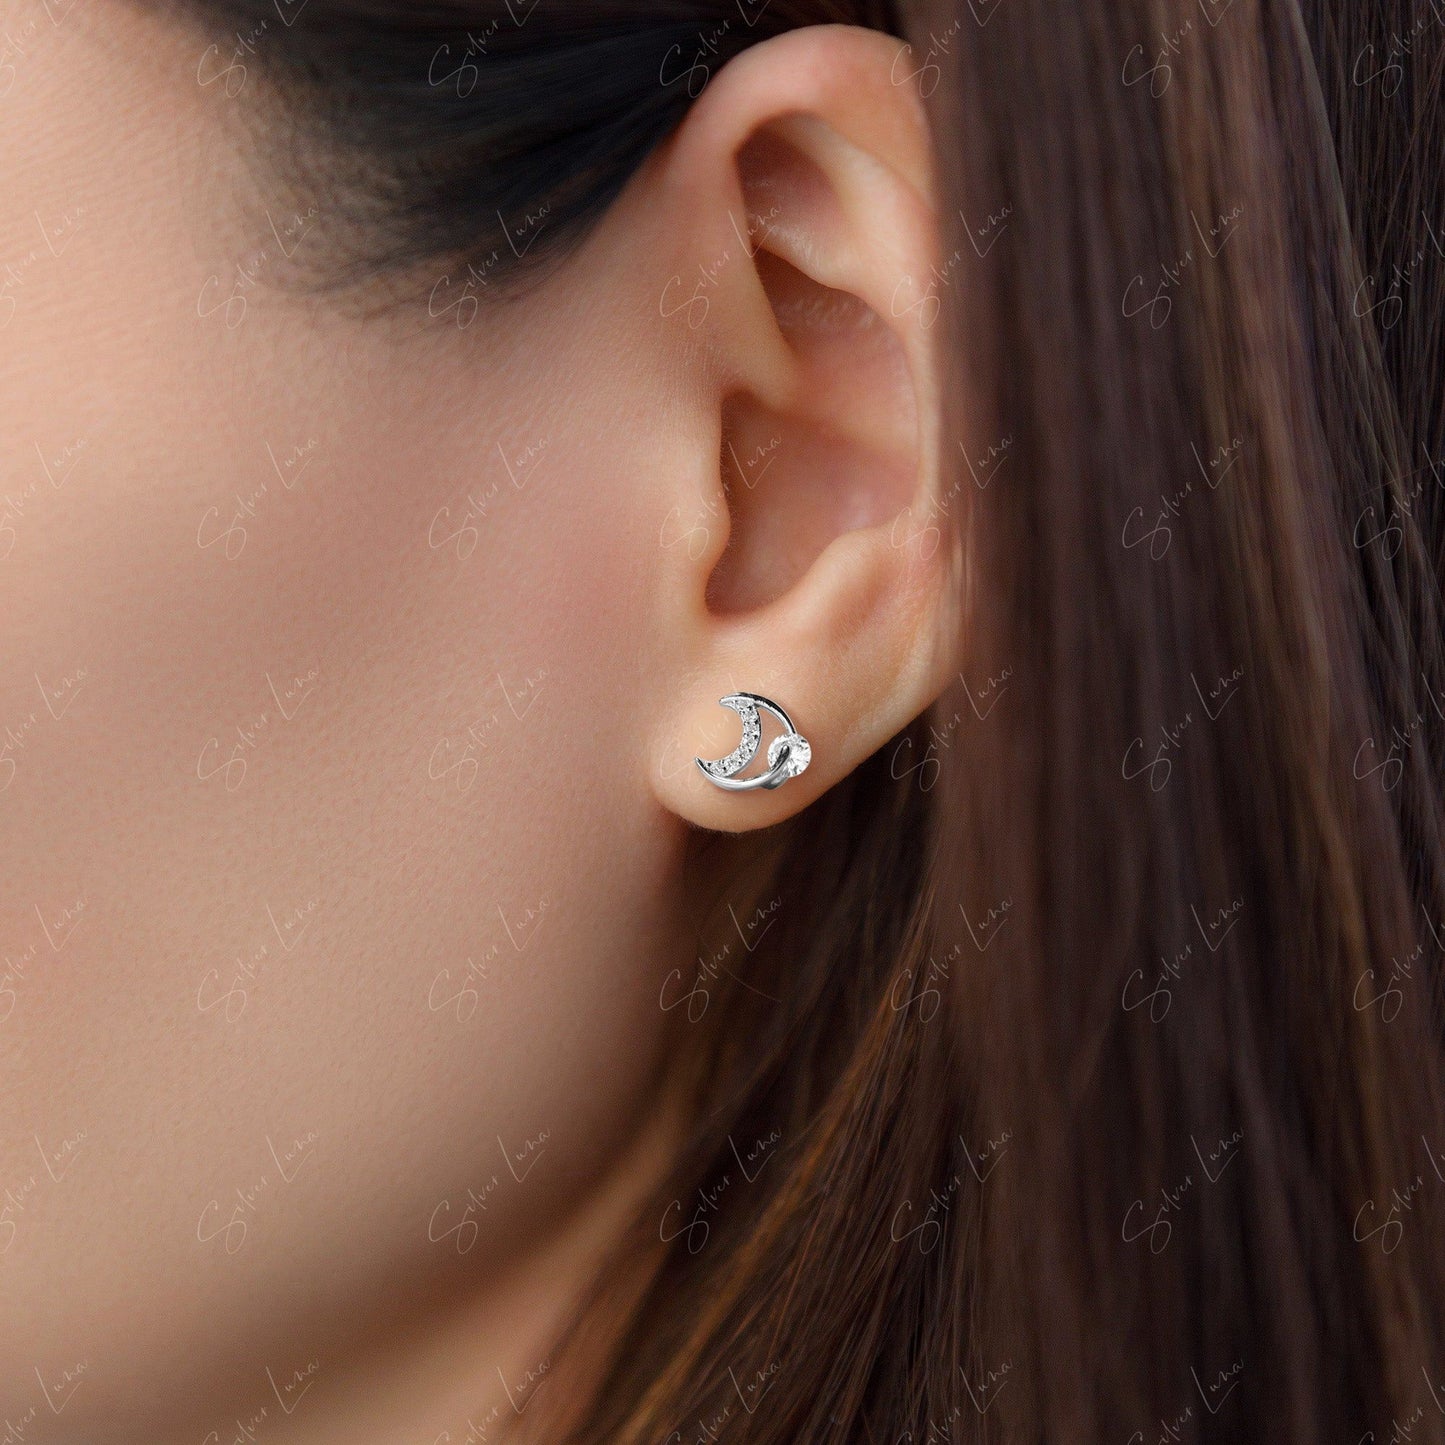 Cubic zirconia moon and star stud earrings